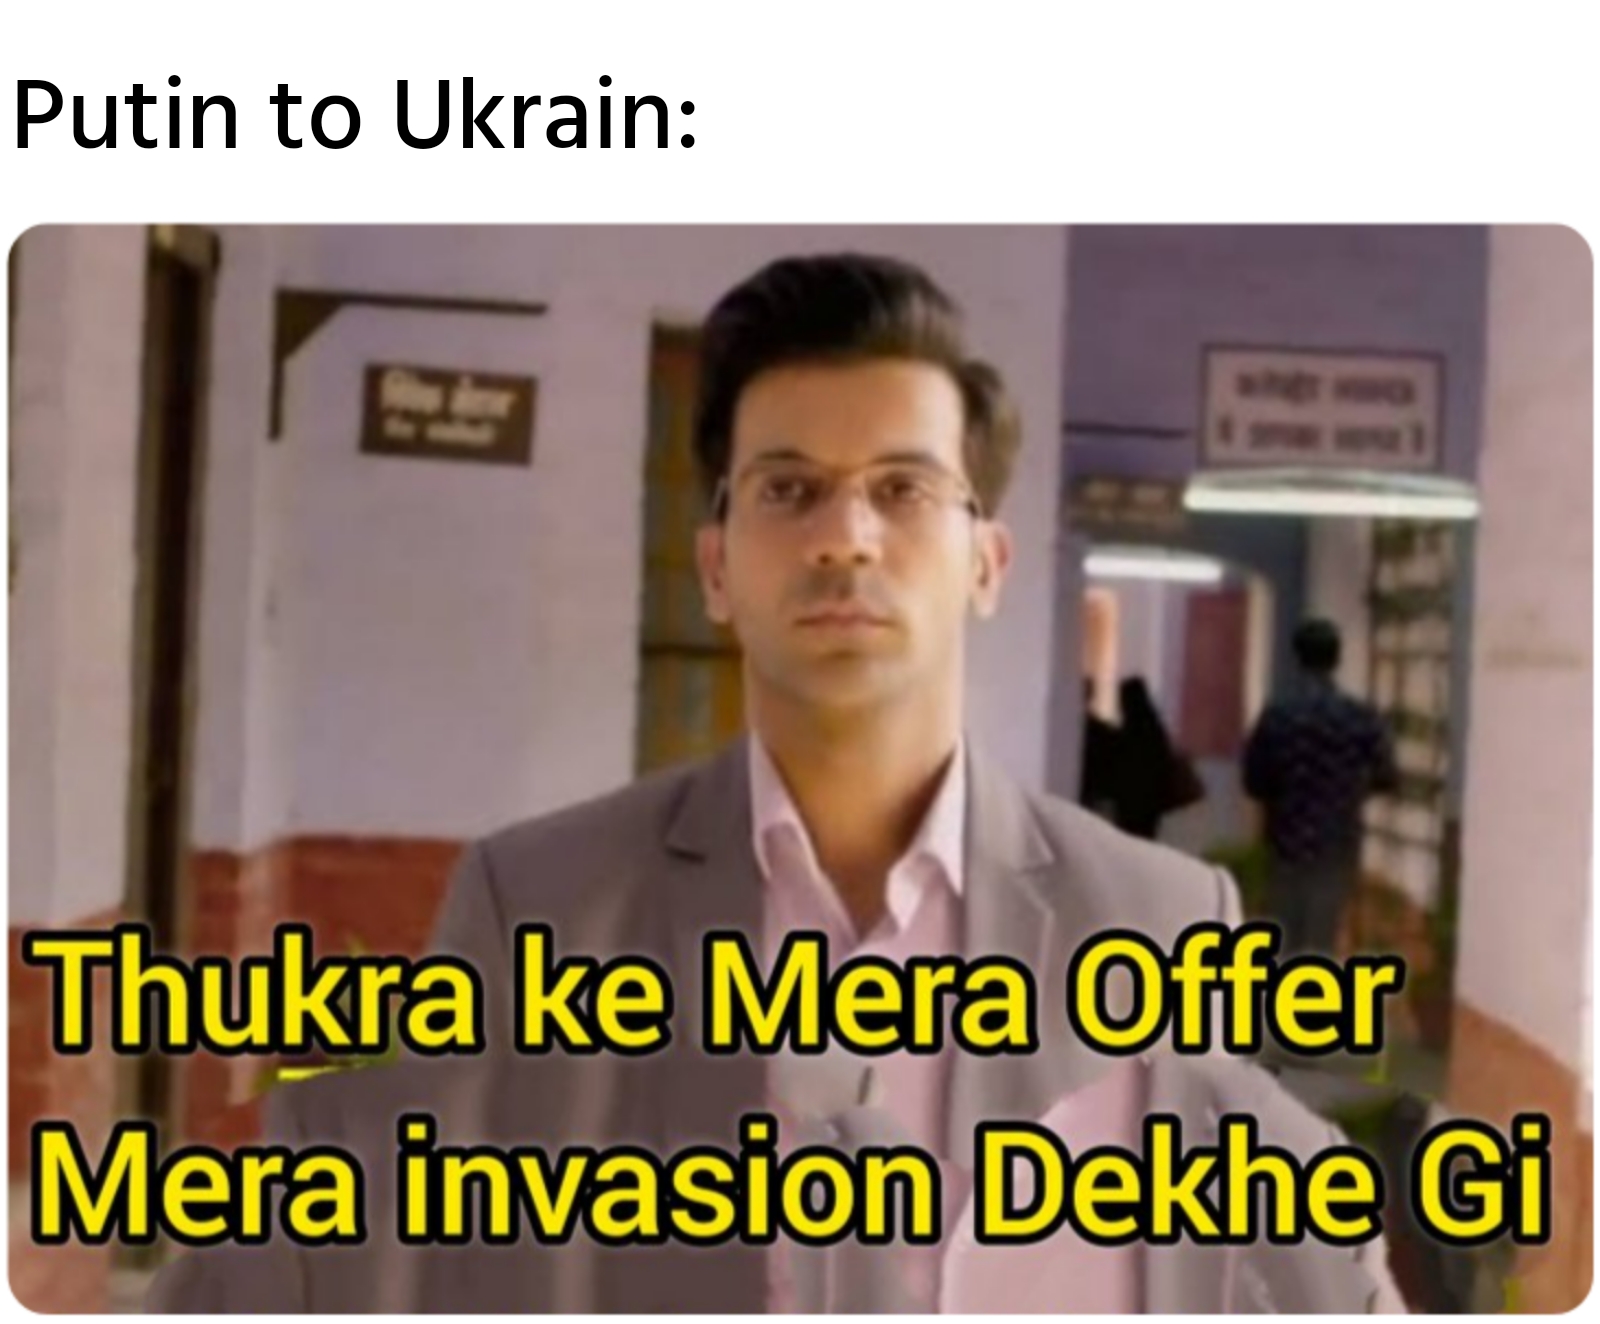 Putin to Ukrain: Thukra ke mera offer mera invasion dekhegi meme.jpg